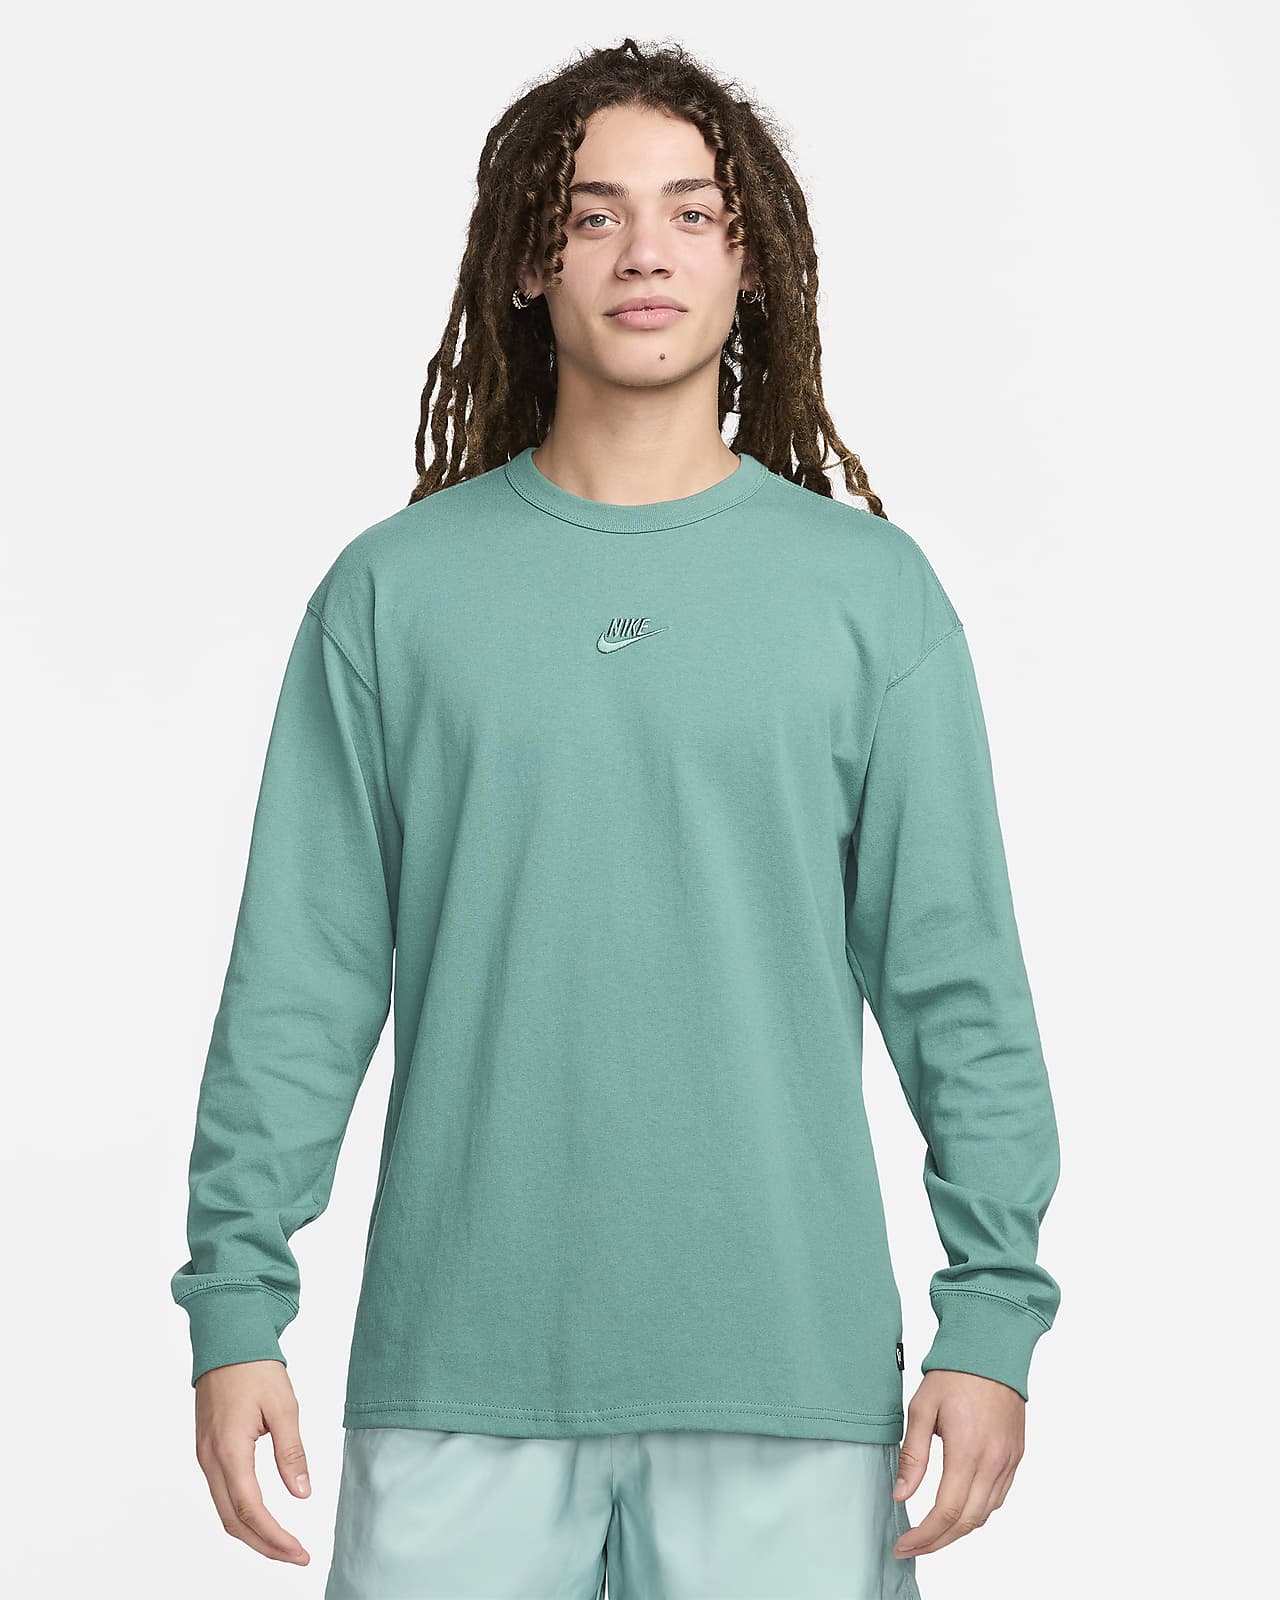 2020 Winter New Round Neck Long Sleeve T-Shirt Men Sweatshirt